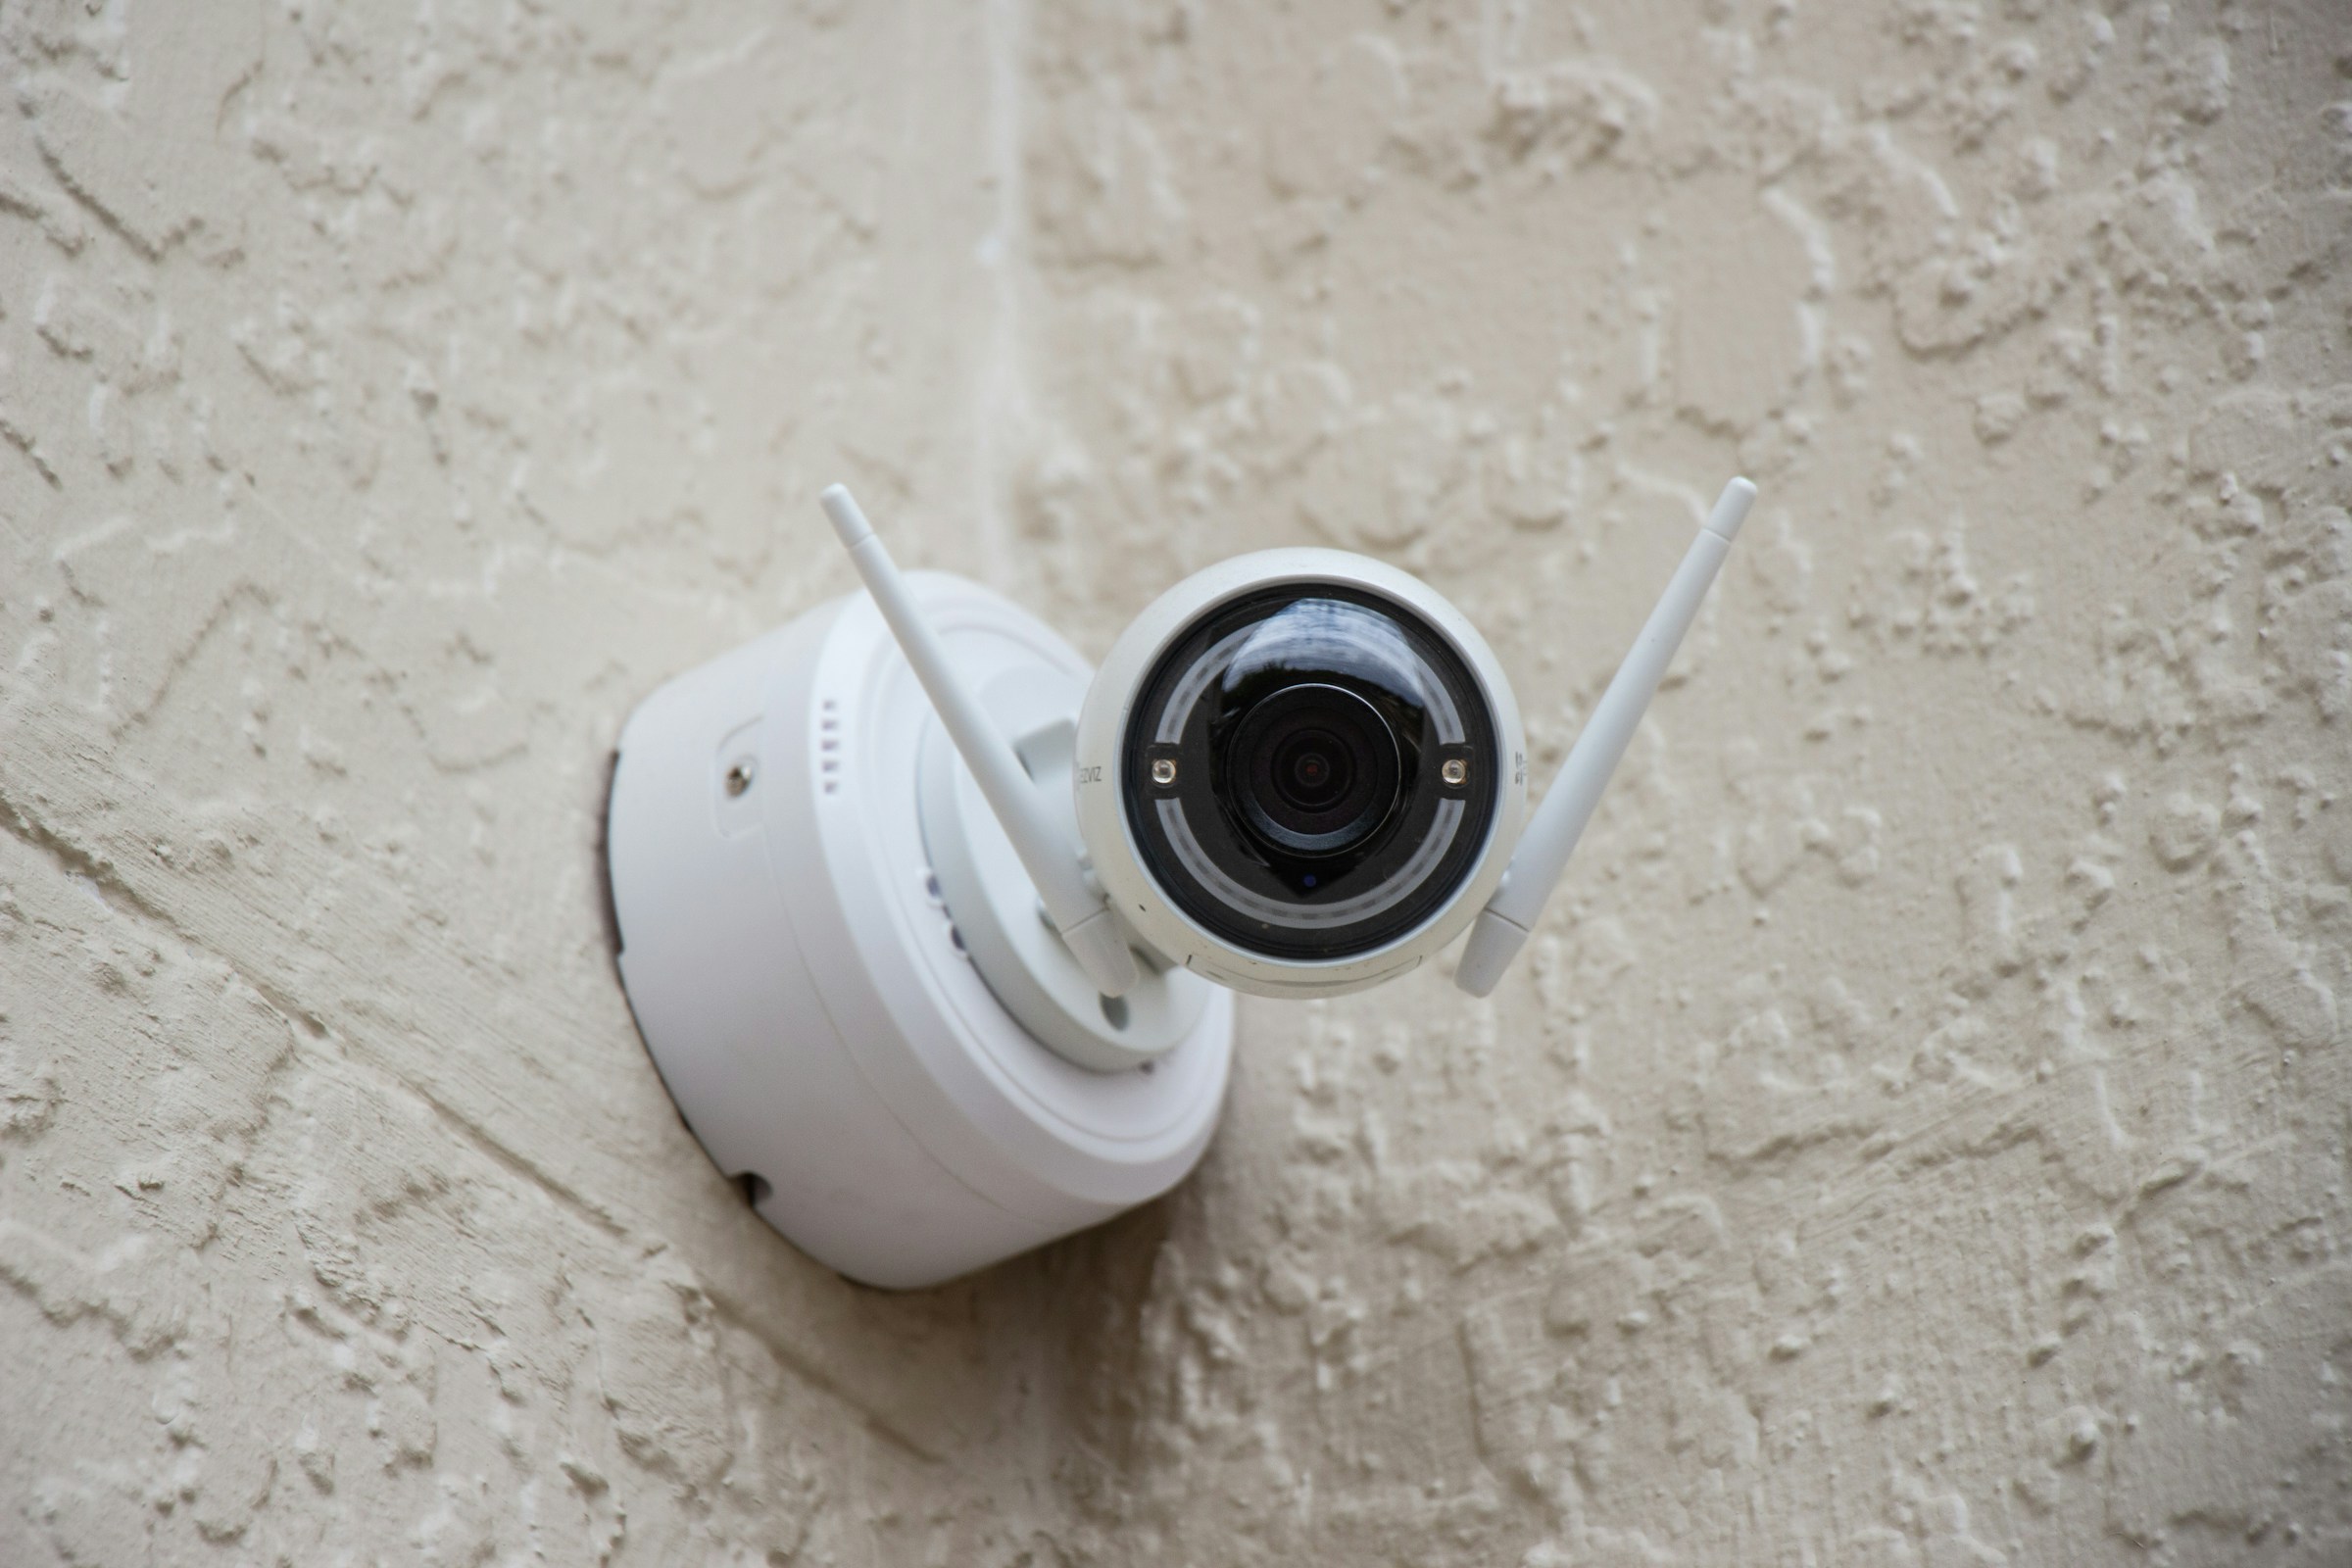 A white surveillance camera | Source: Unsplash